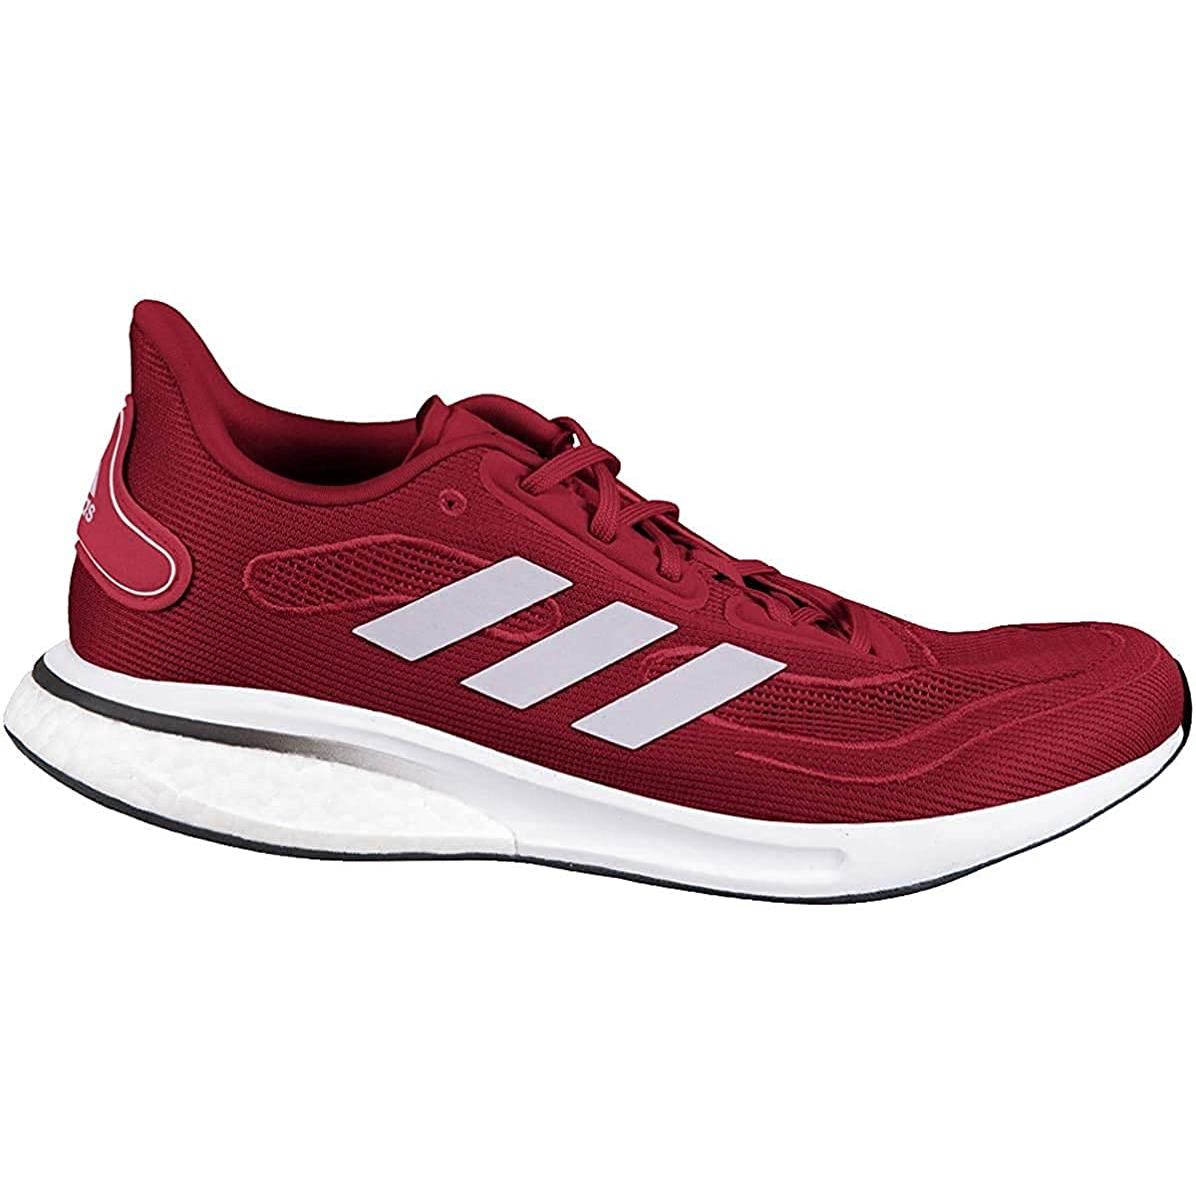 Adidas Mens Supernova Running Shoes - Team Power Red TEAM POWER RED